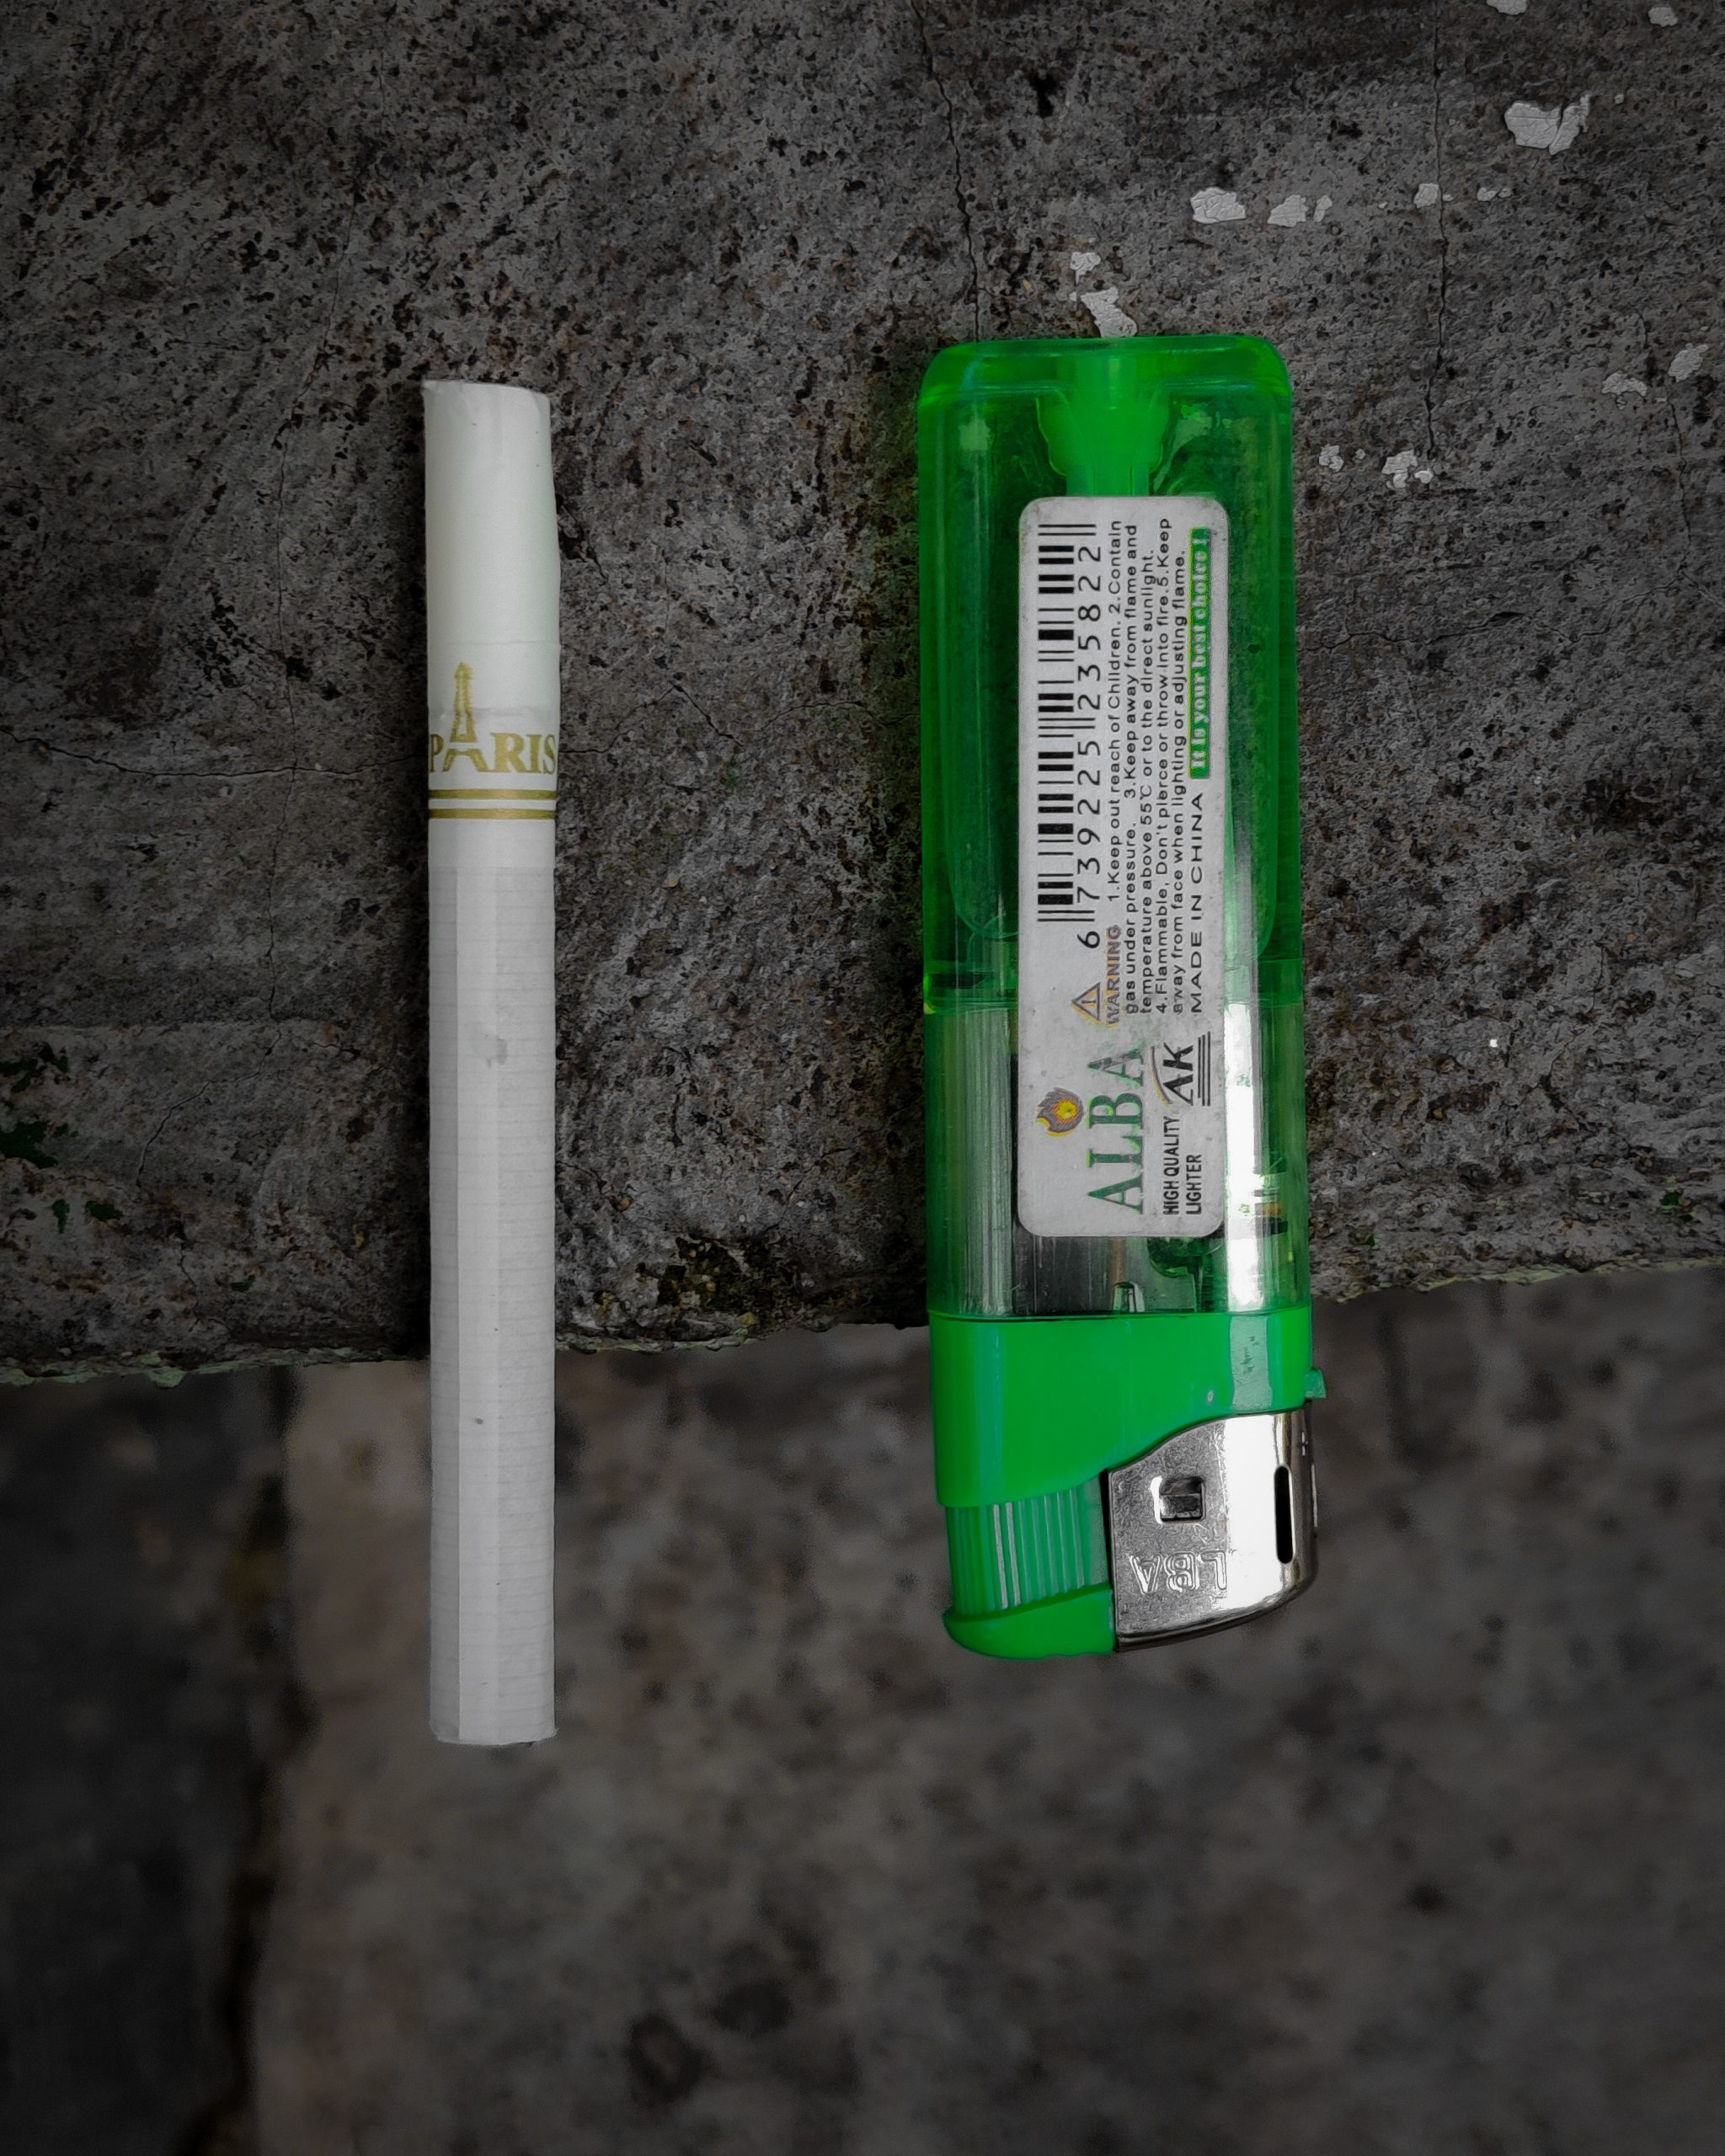 Cigarette and lighter